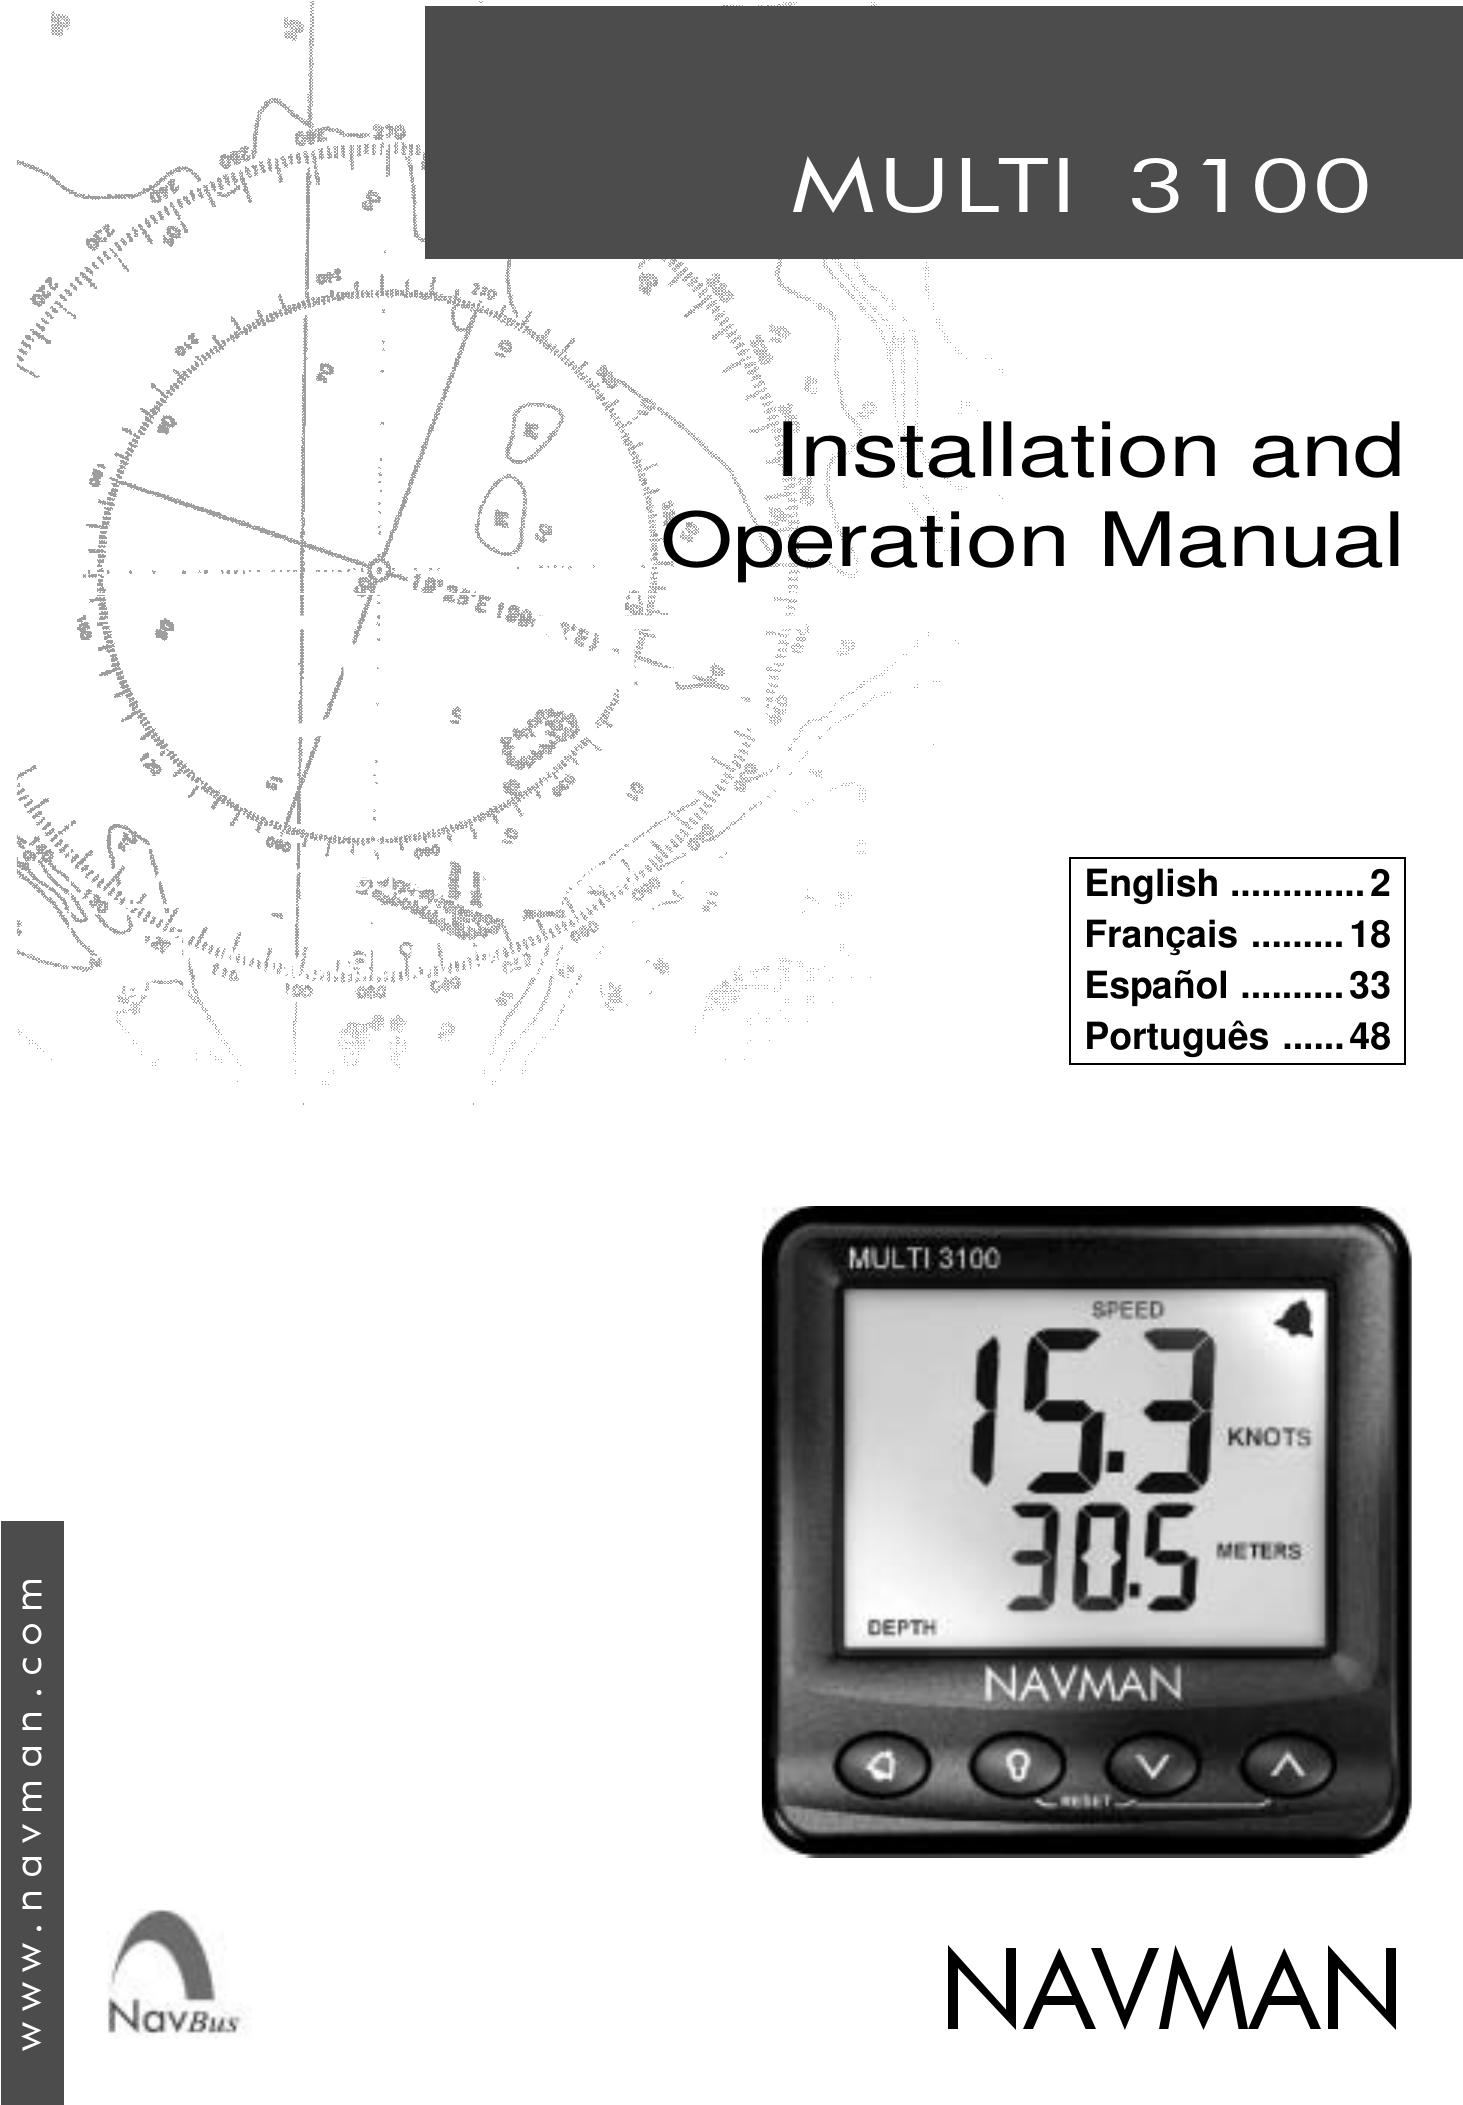 Navman MULTI 3100 Marine GPS System User Manual